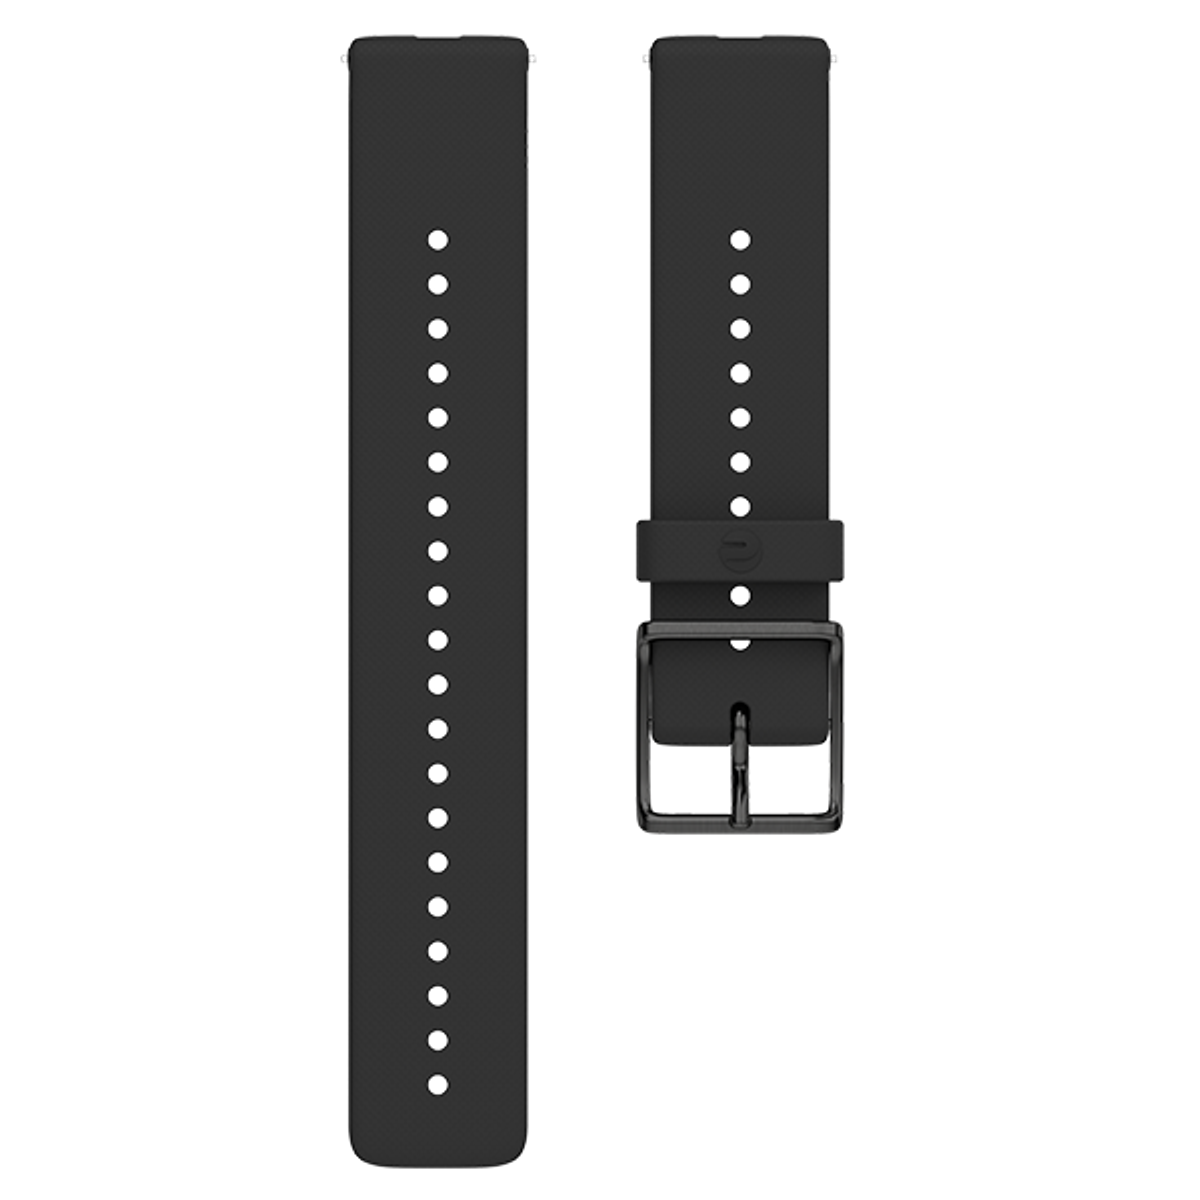 Silicone Bracelet For Polar ignite 2 Smartwatch Sport Wrist Strap Soft  Watchband For Polar Vantage M/